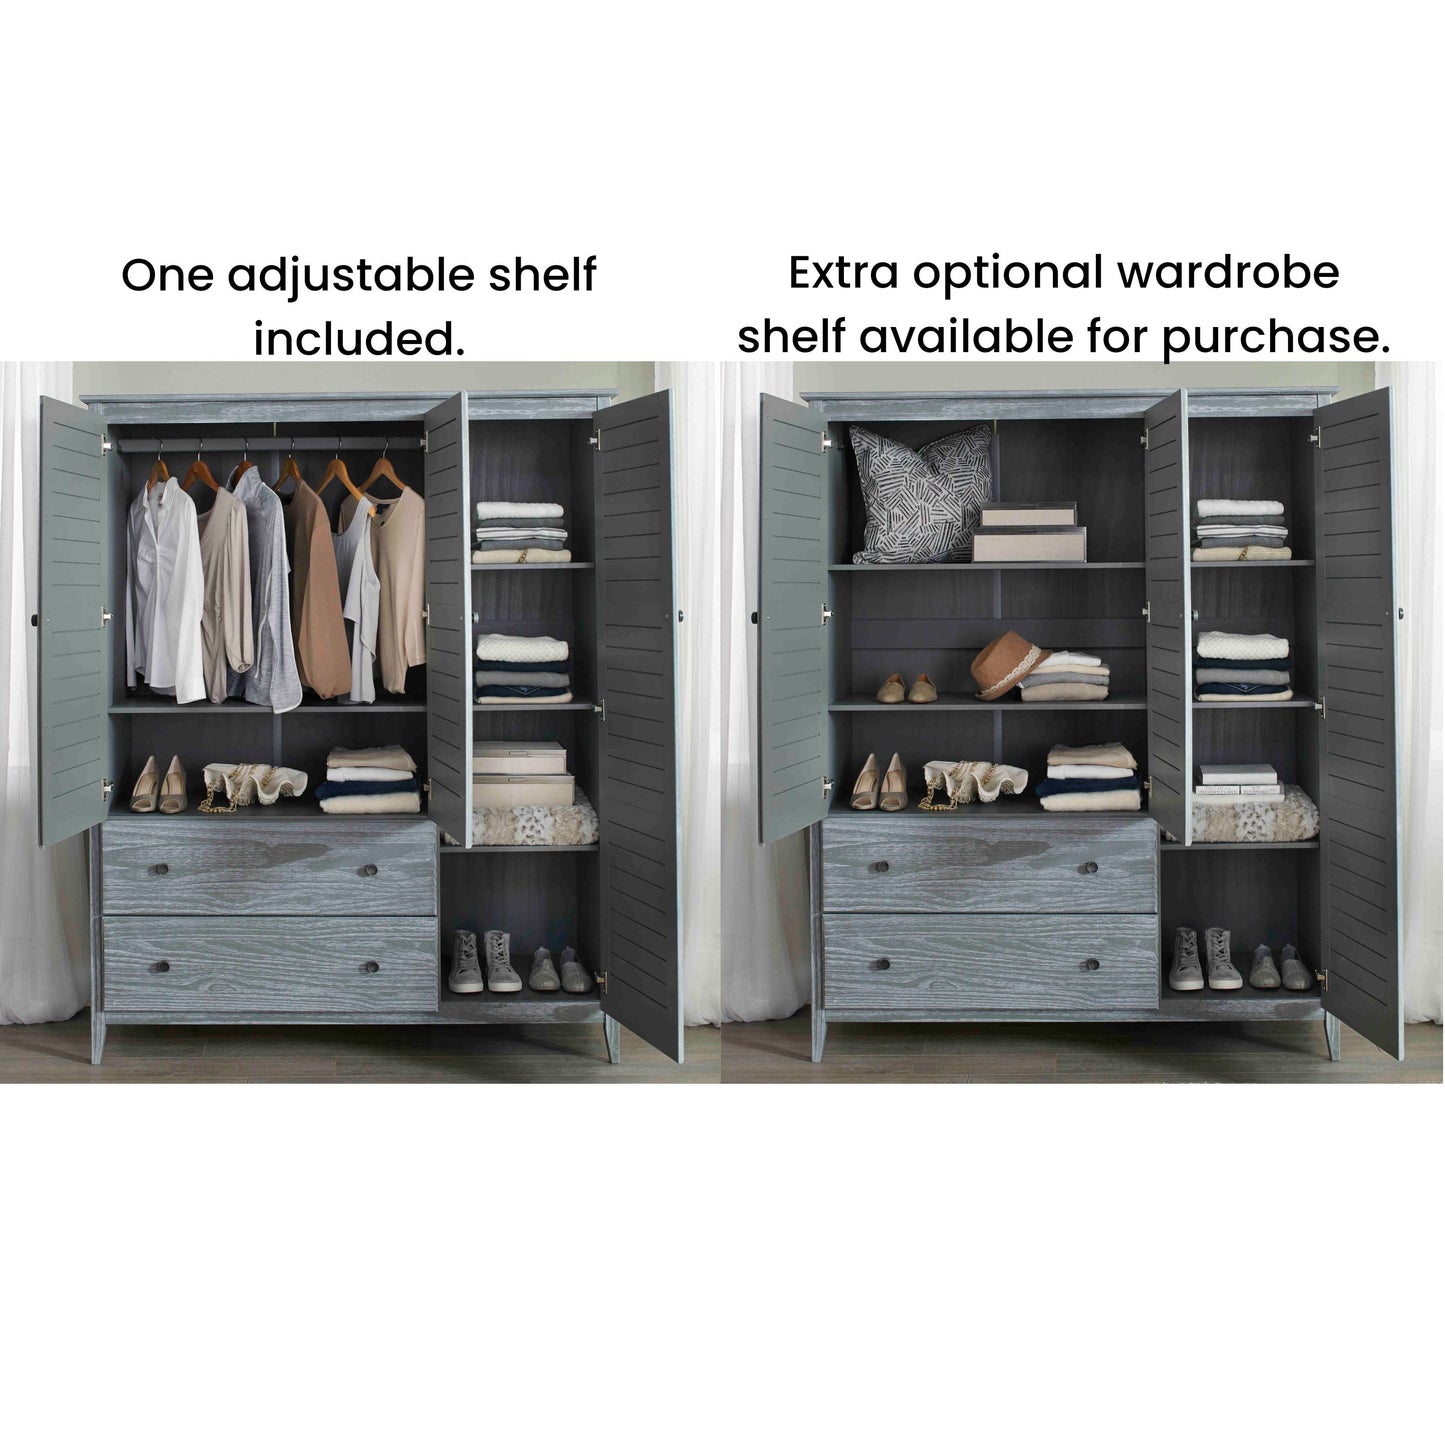 Greenport Optional Wardrobe Shelf